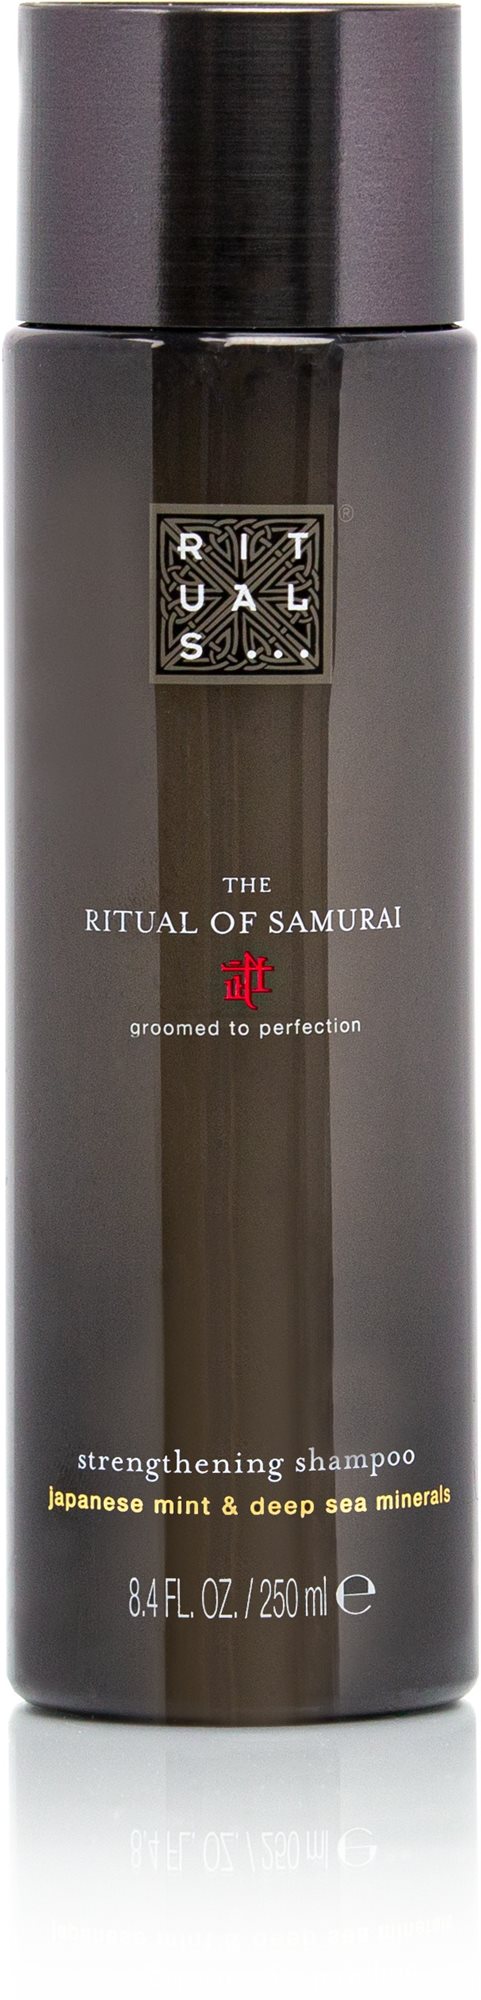 RITUALS The Ritual of Samurai sampon 250 ml